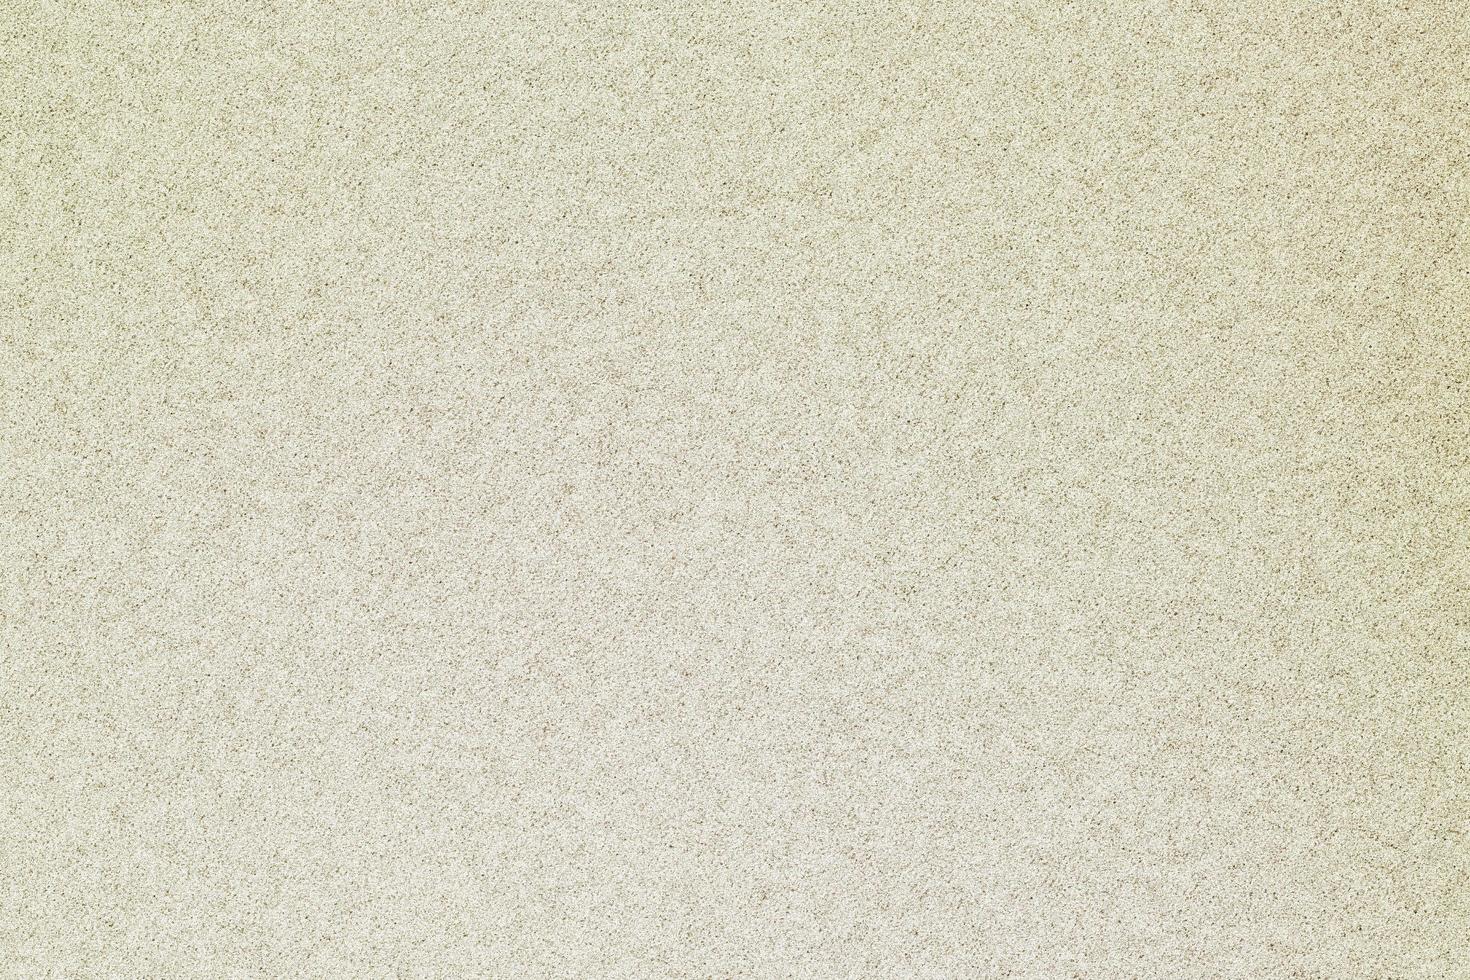 oud schuurpapier oppervlak, textuur achtergrond foto